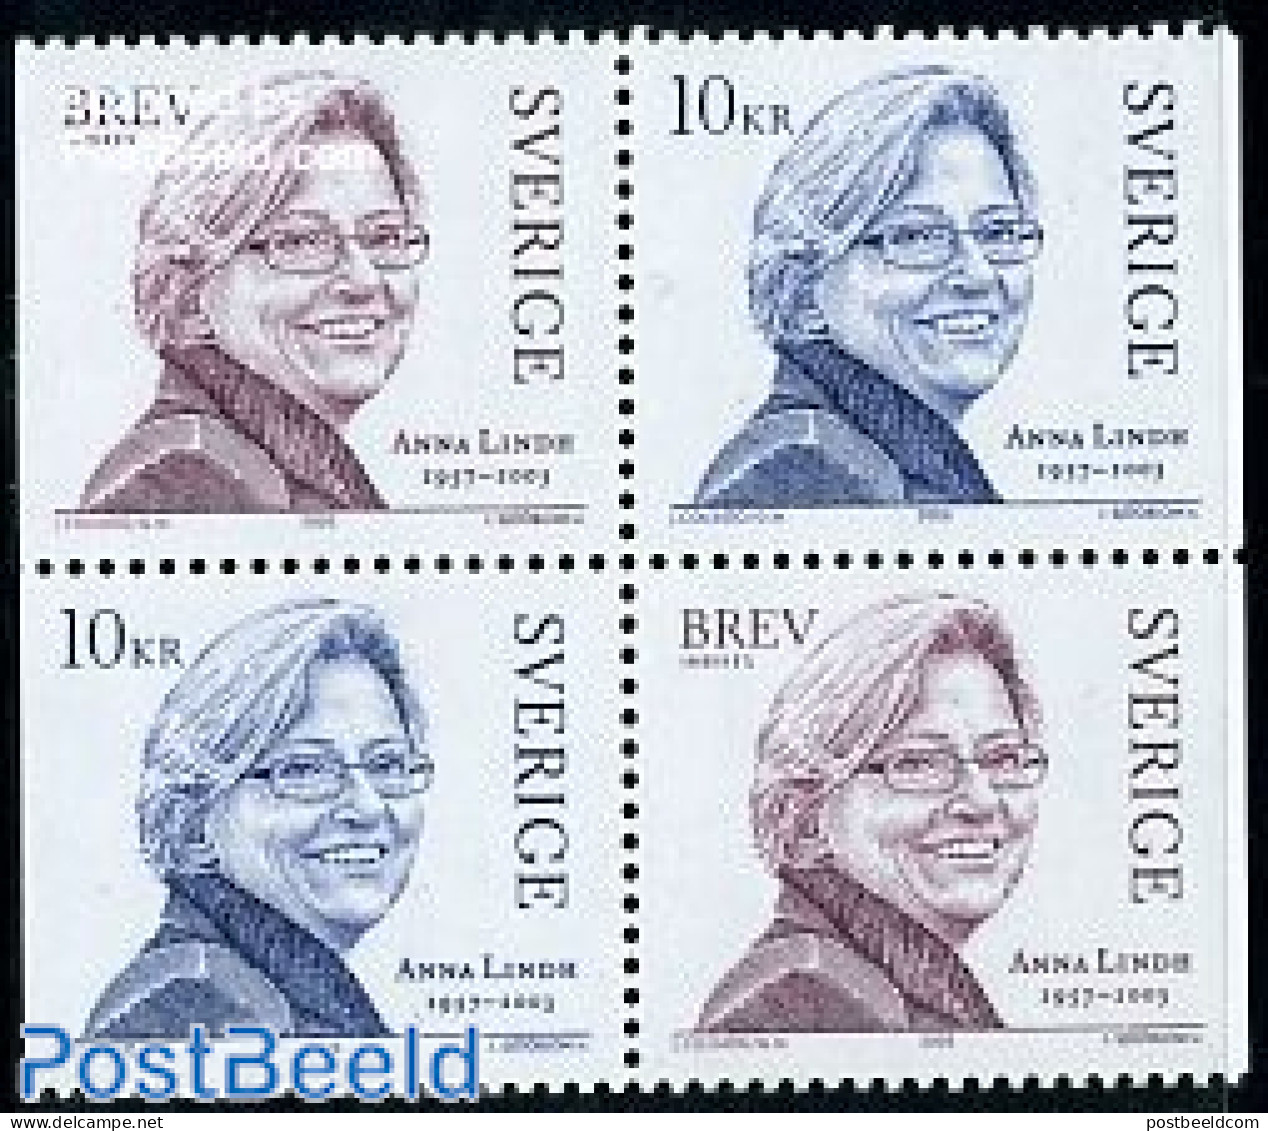 Sweden 2003 Anna Lindh 4v [+], Mint NH, History - Politicians - Unused Stamps